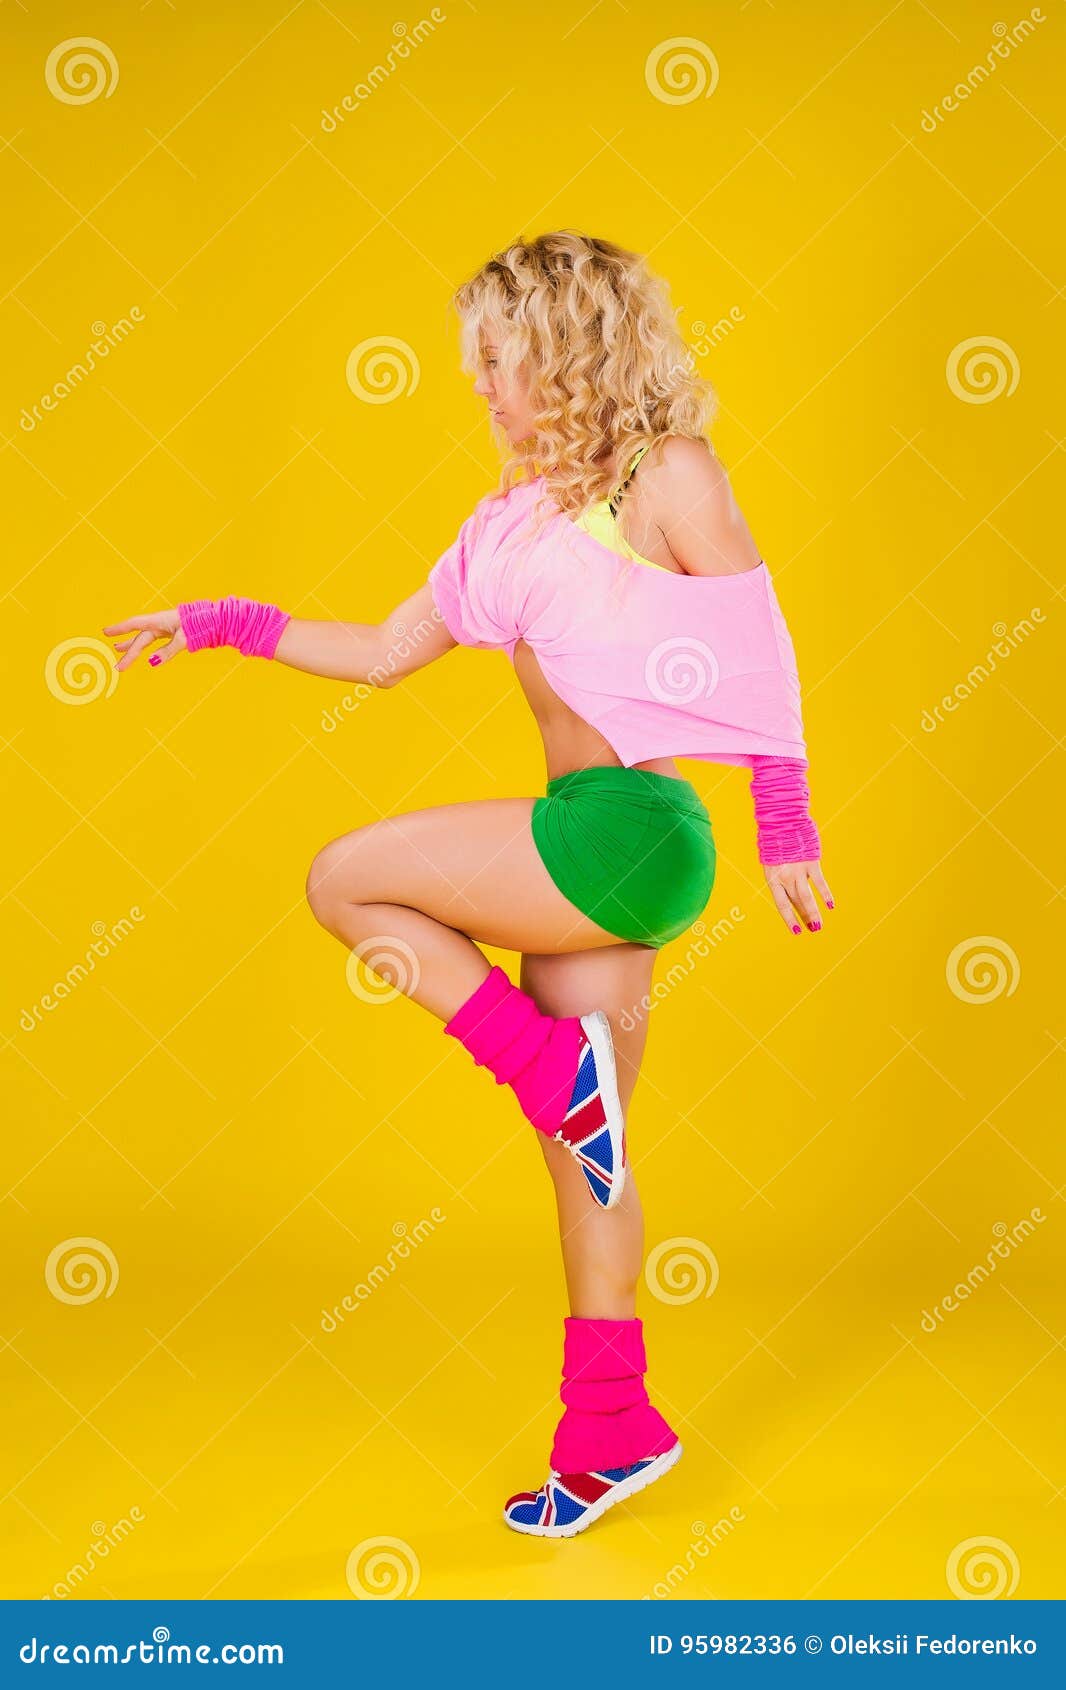 Girl Athlete Posing on Yellow Background Stock Photo - Image of ...